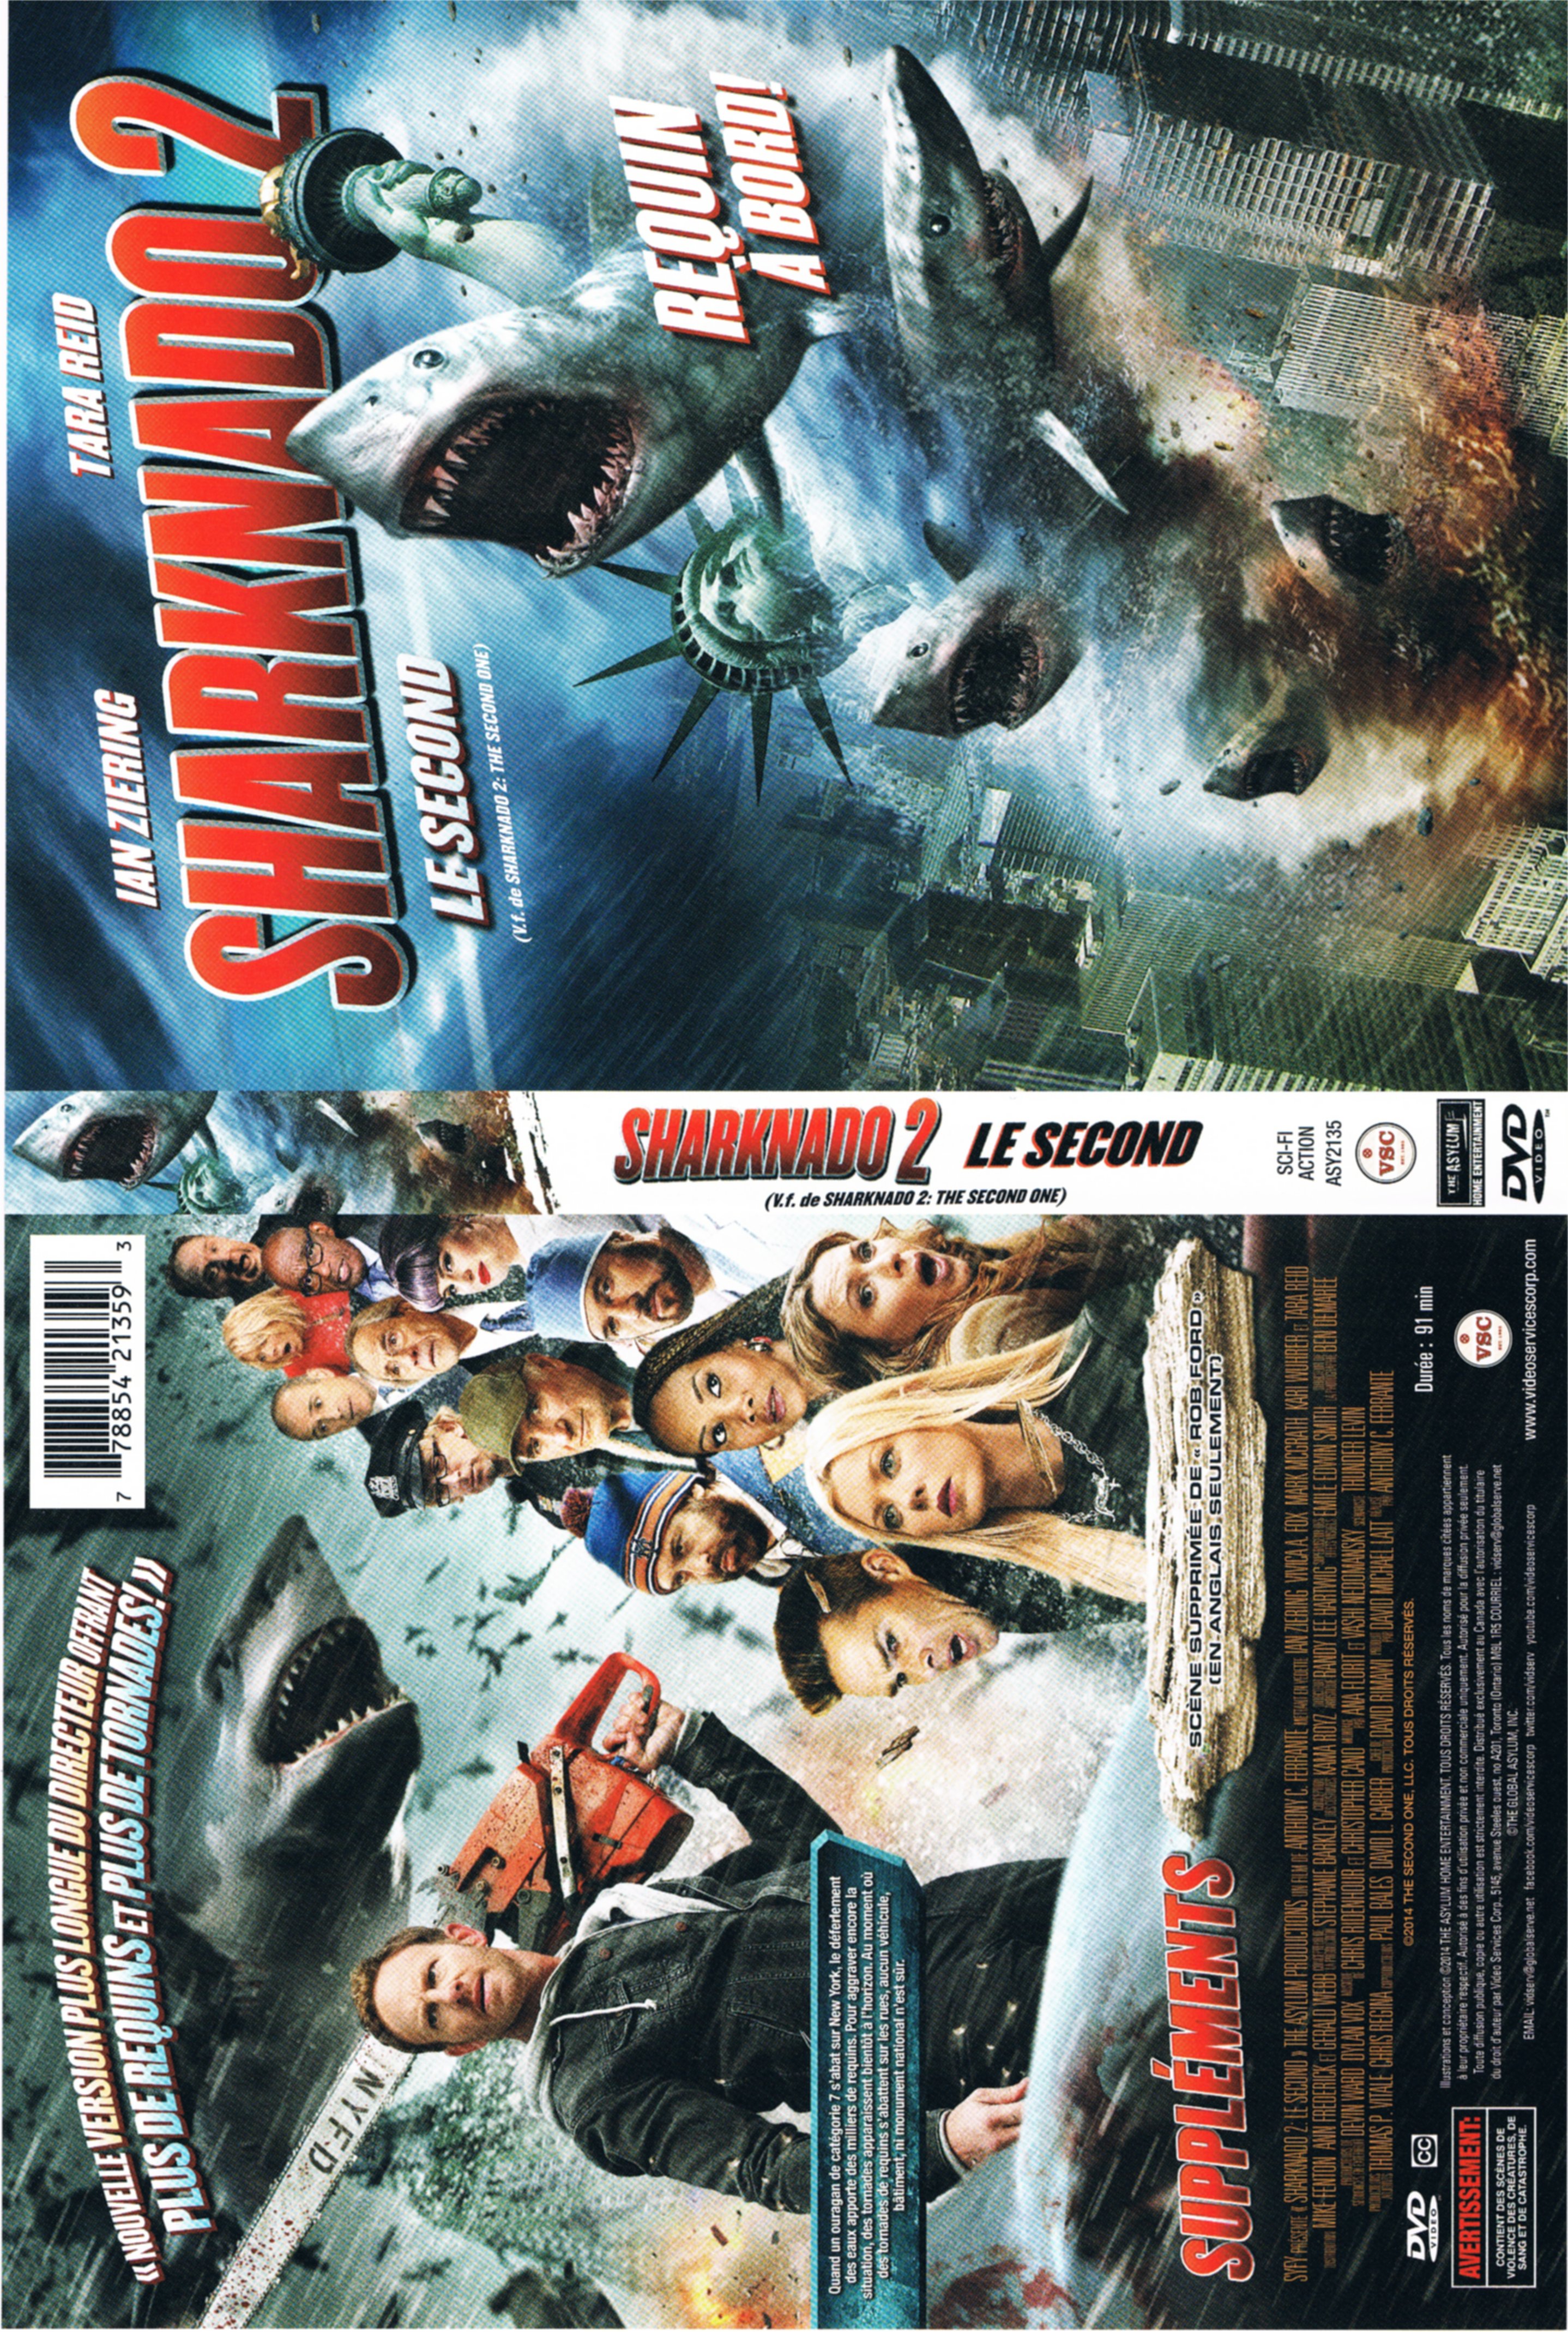 Jaquette DVD Sharknado 2 (Canadienne)